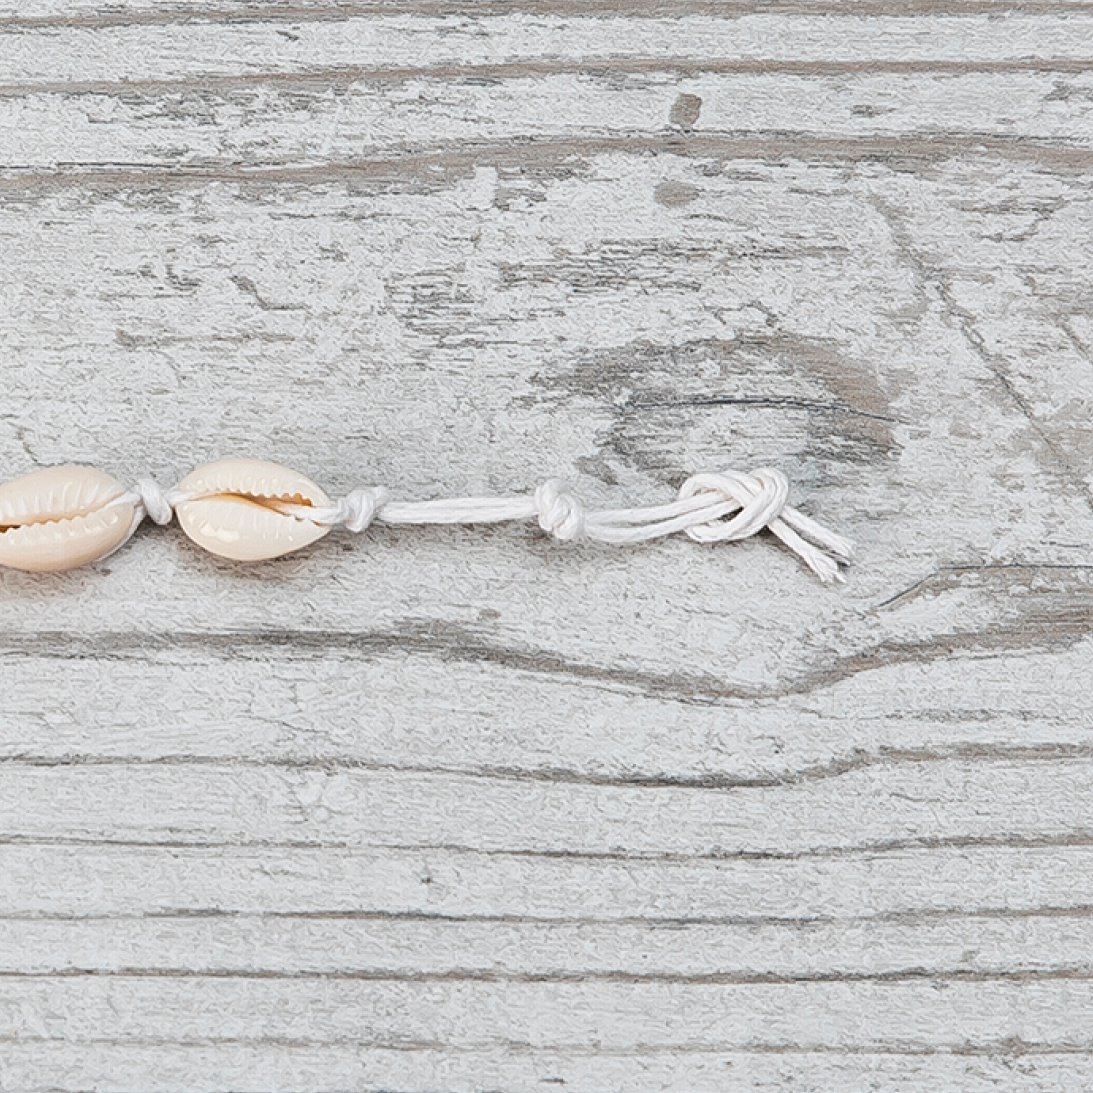 Knotted bracelet with seashells Diy6017-step4.jpg